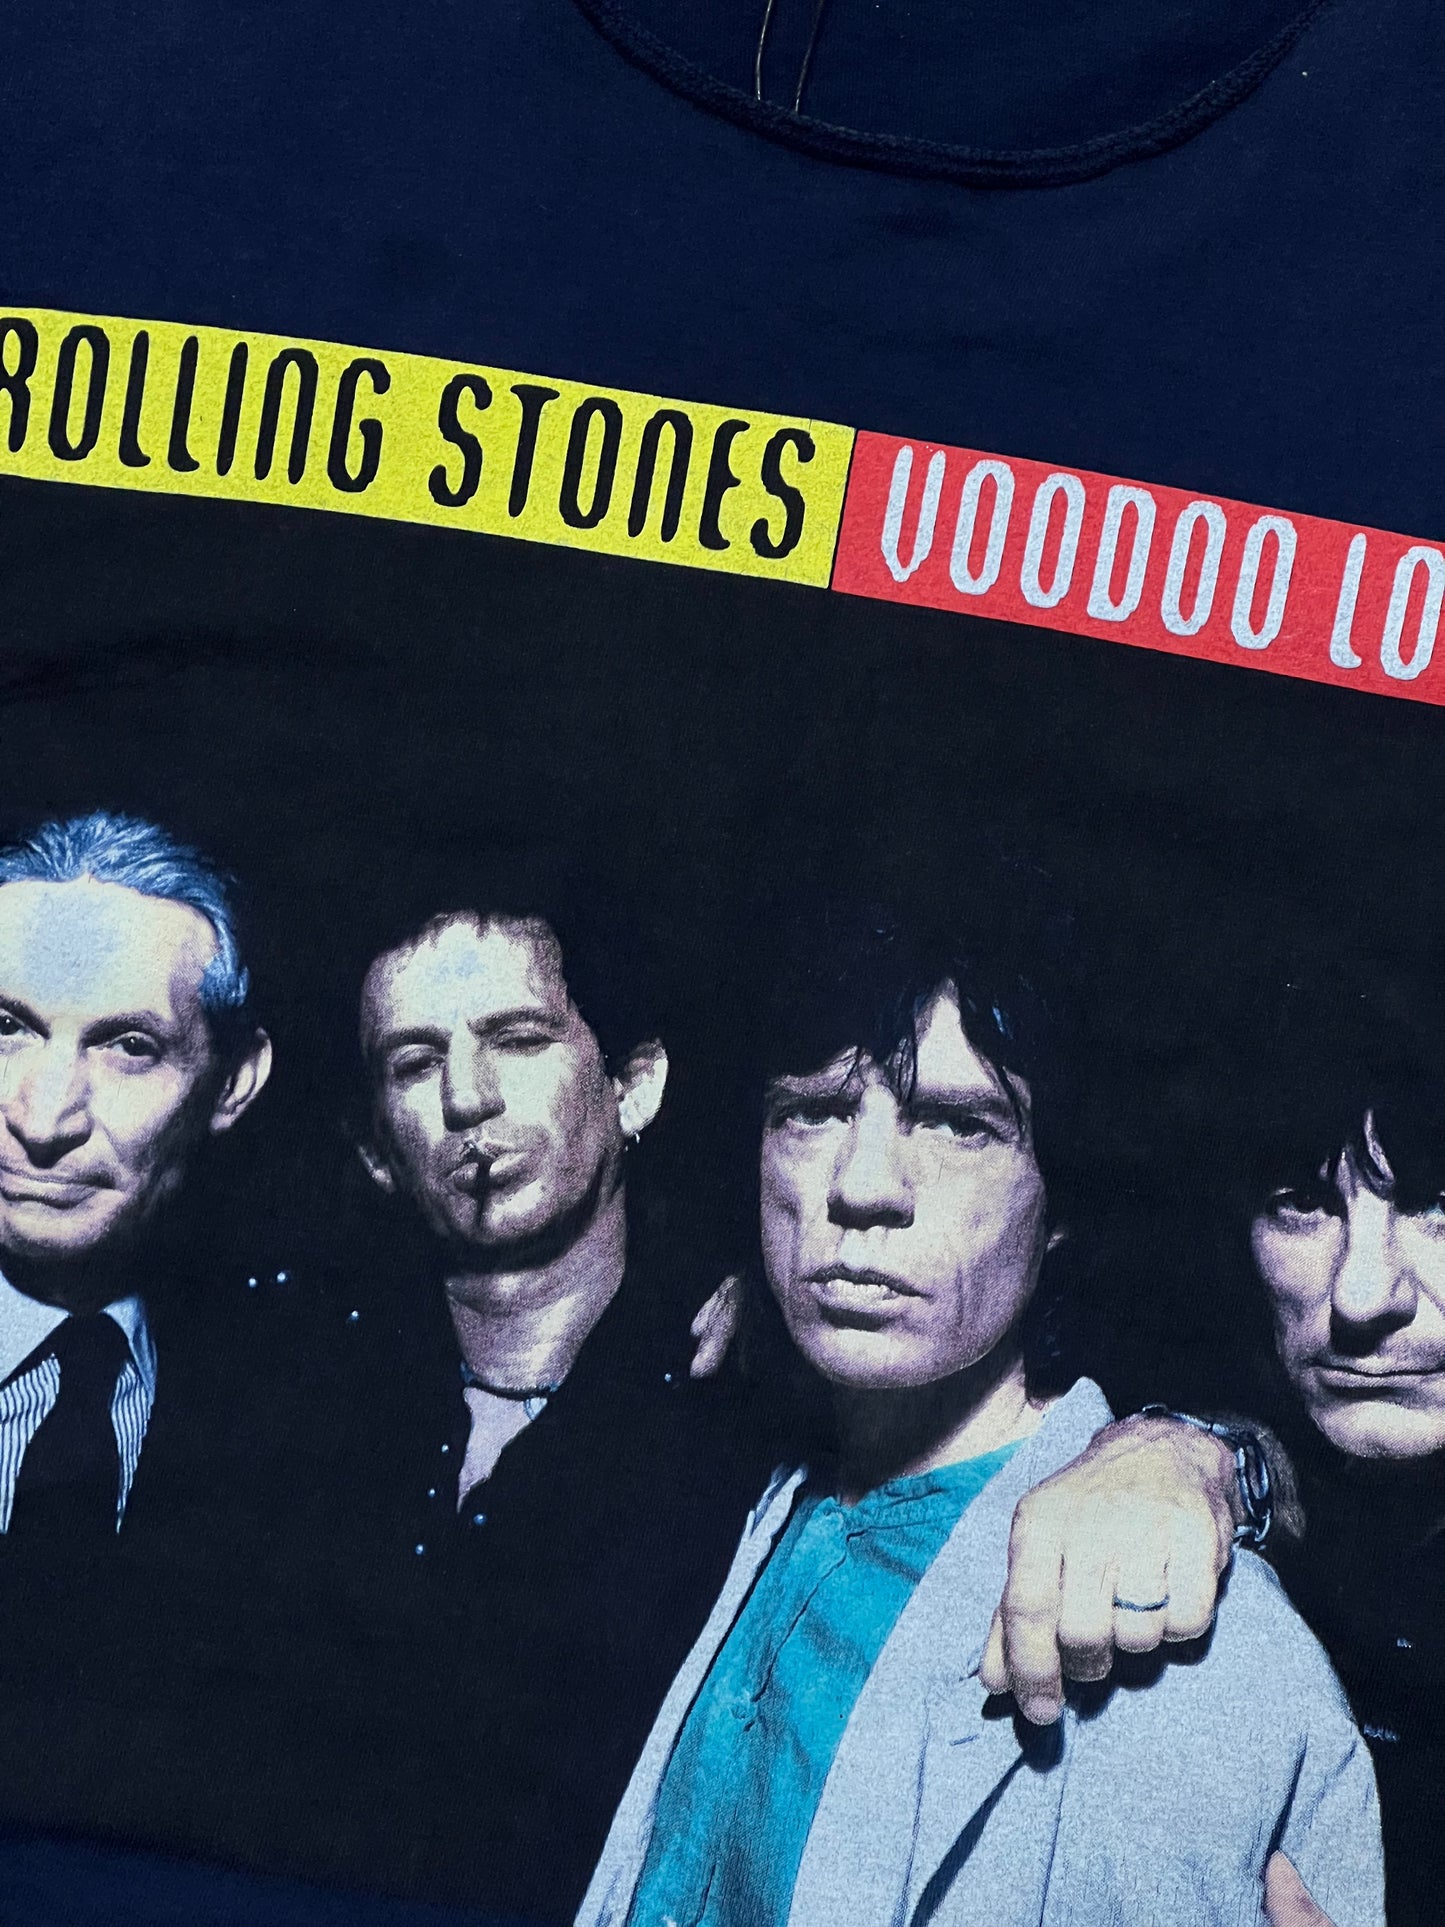 ‘94 Stones Voodoo Lounge Shirt